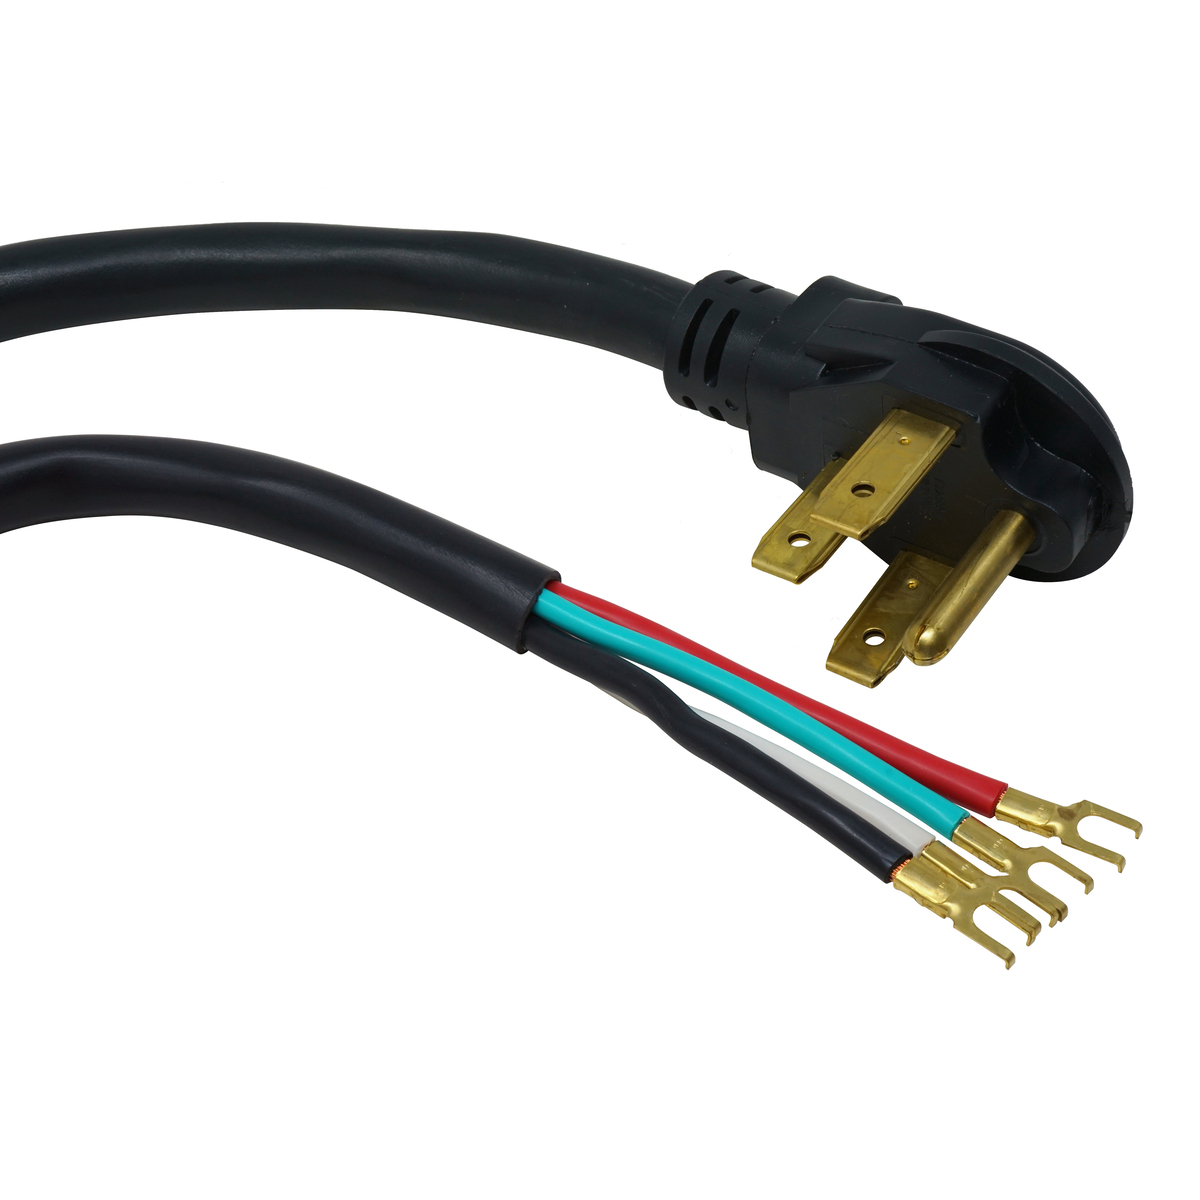 Range Replacement Cord - 6/2-8/2 50-AmpRound SRDT 4-Wire 4' with NEMA 14-50 Plug - Black